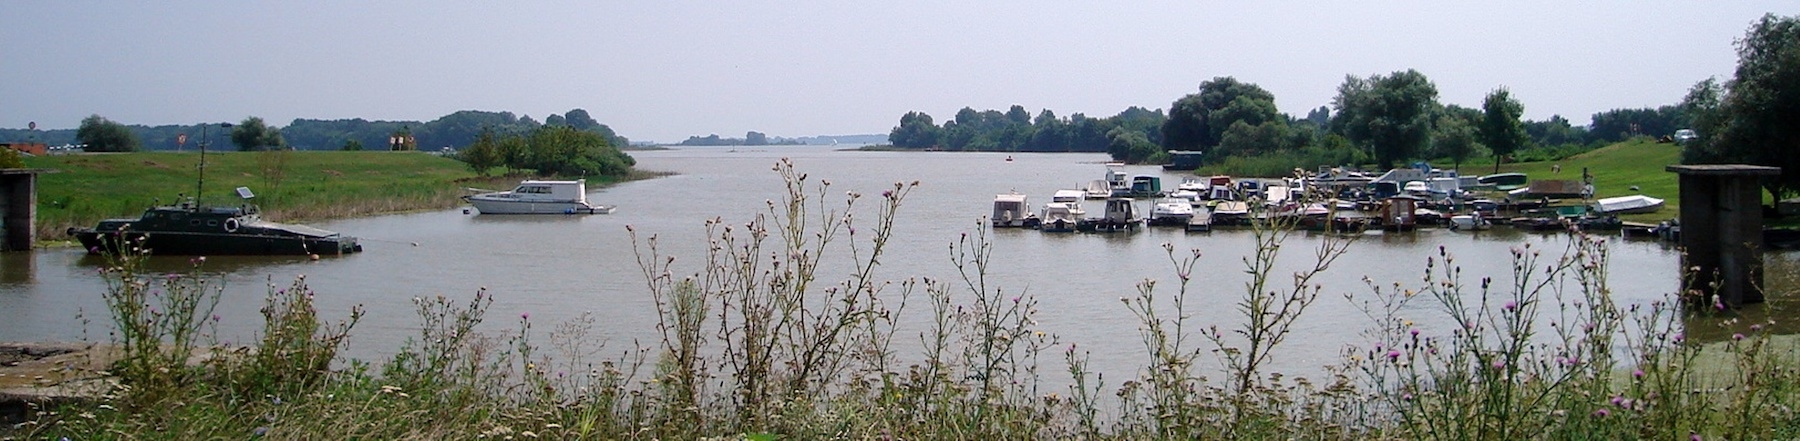 Csónakkikötő a Tisza-tavon - Forrás: Tambo, Wikipedia Commons CC BY-SA 3.0